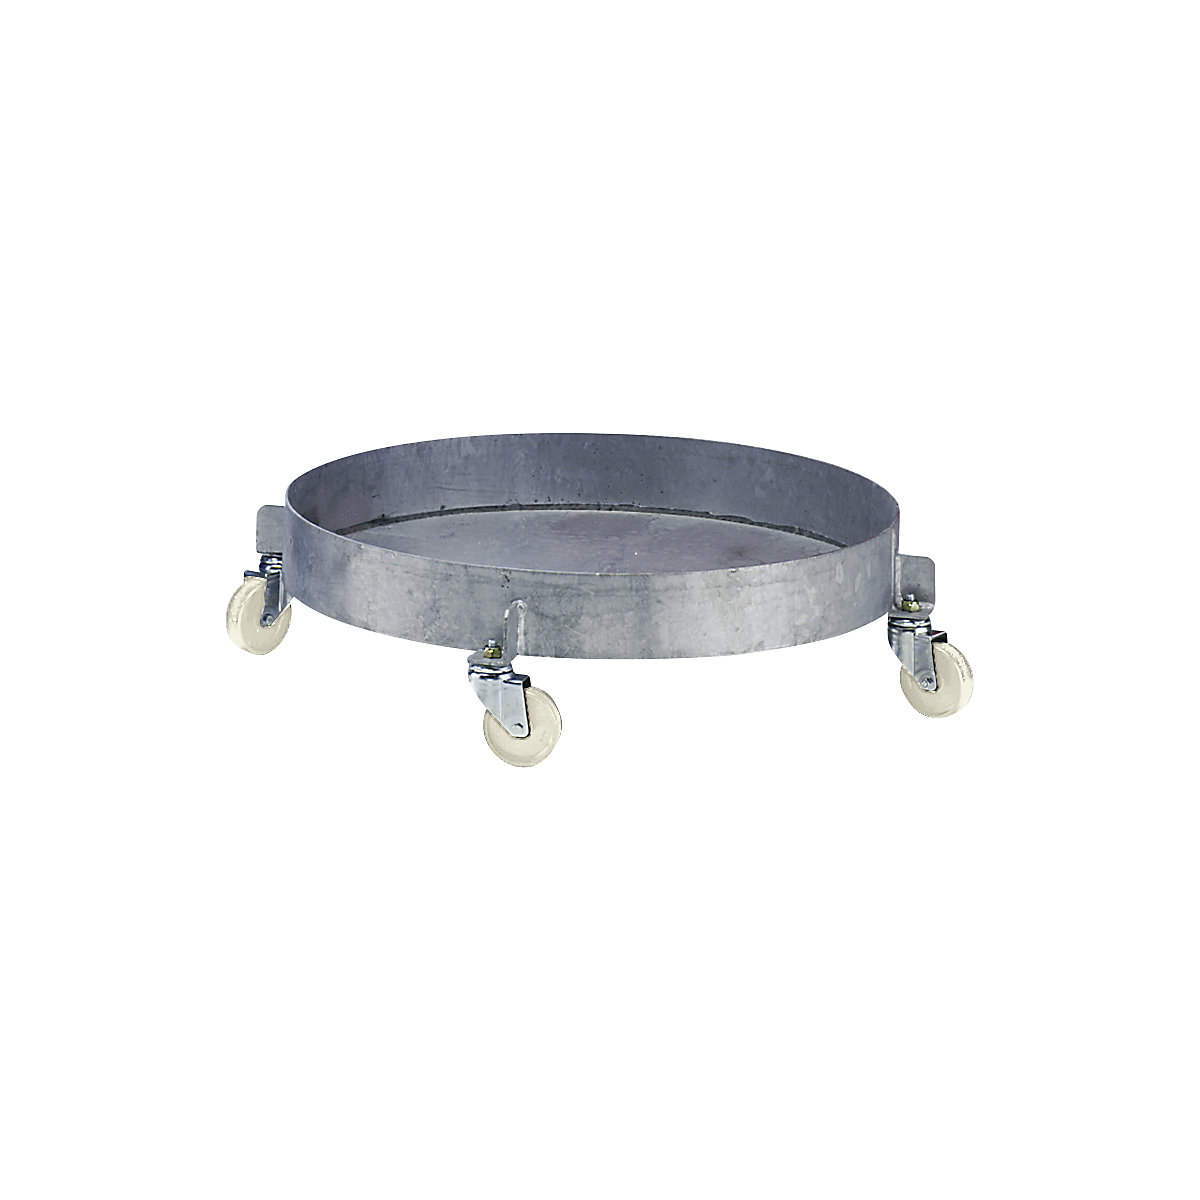 EUROKRAFTpro – Drum dolly, with watertight metal tray, zinc plated, internal frame Ø 610 mm